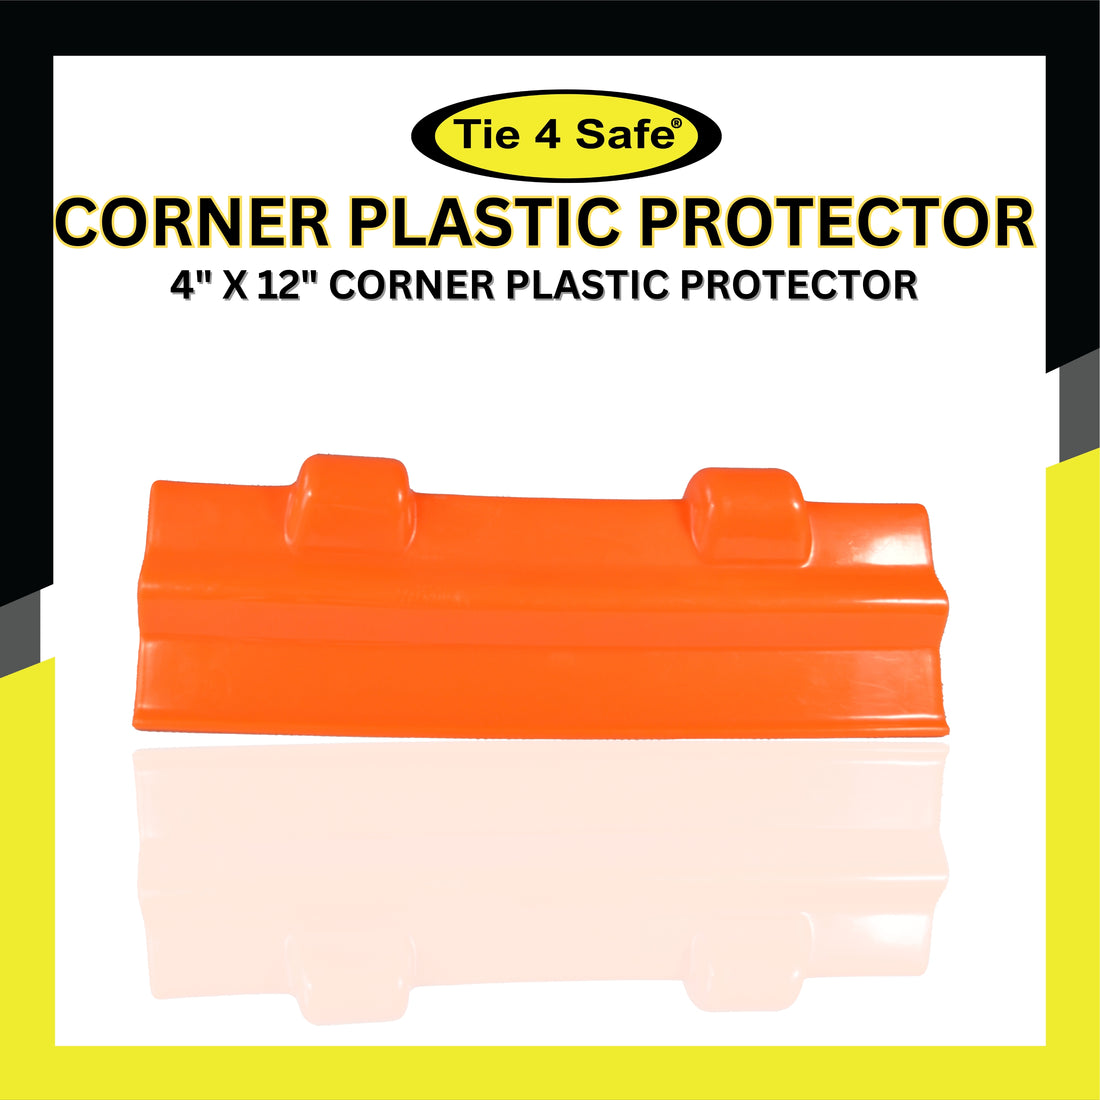 4" x 12" Corner Plastic Protector